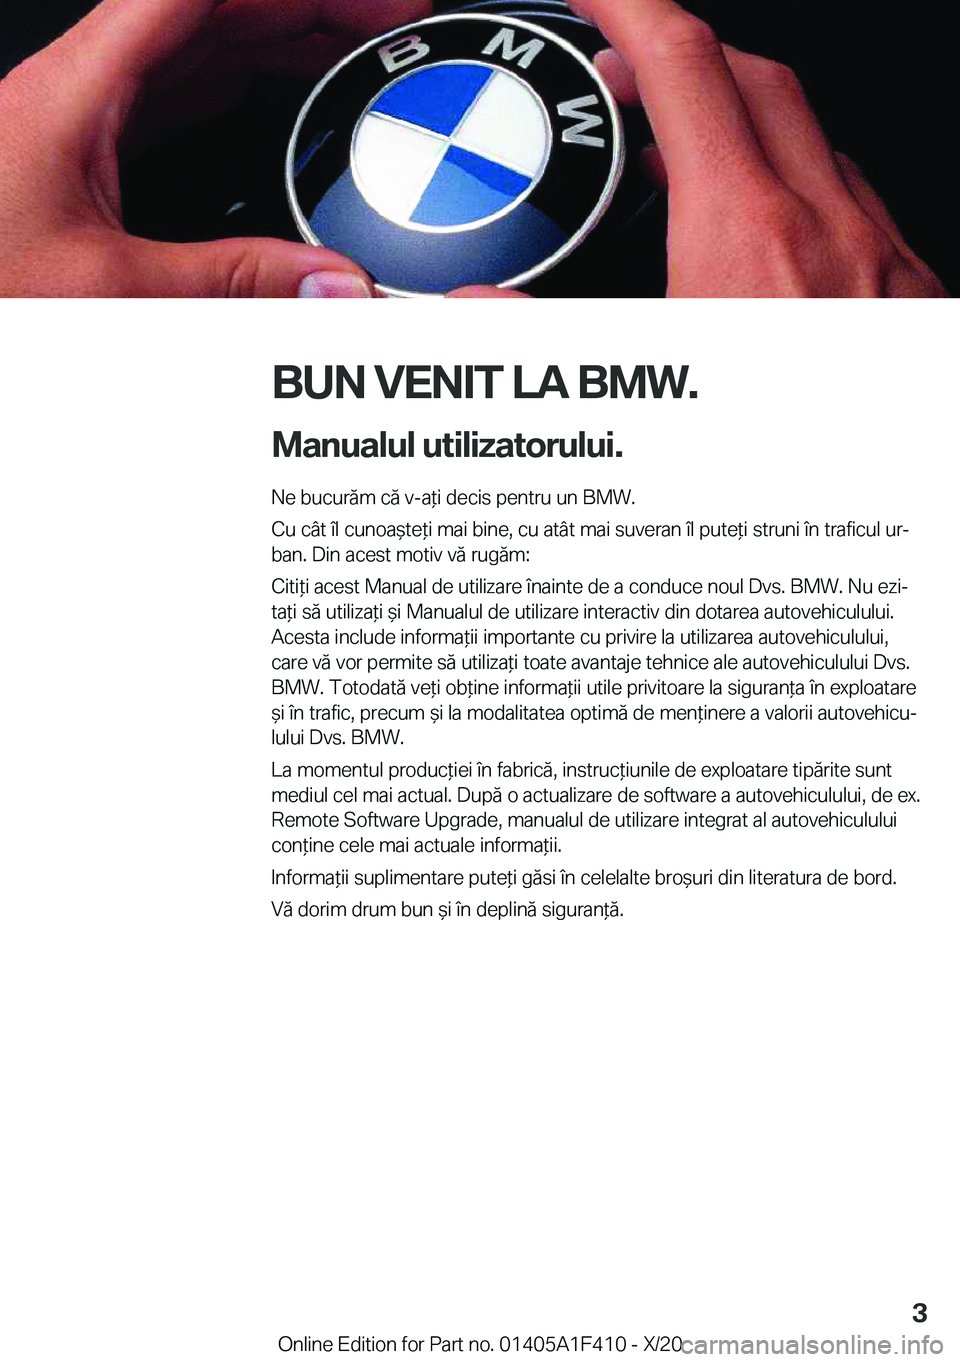 BMW X5 2021  Ghiduri De Utilizare (in Romanian) �B�U�N��V�E�N�I�T��L�A��B�M�W�.�M�a�n�u�a�l�u�l��u�t�i�l�i�z�a�t�o�r�u�l�u�i�.
�N�e��b�u�c�u�r�ă�m��c�ă��v�-�a*�i��d�e�c�i�s��p�e�n�t�r�u��u�n��B�M�W�.
�C�u��c�